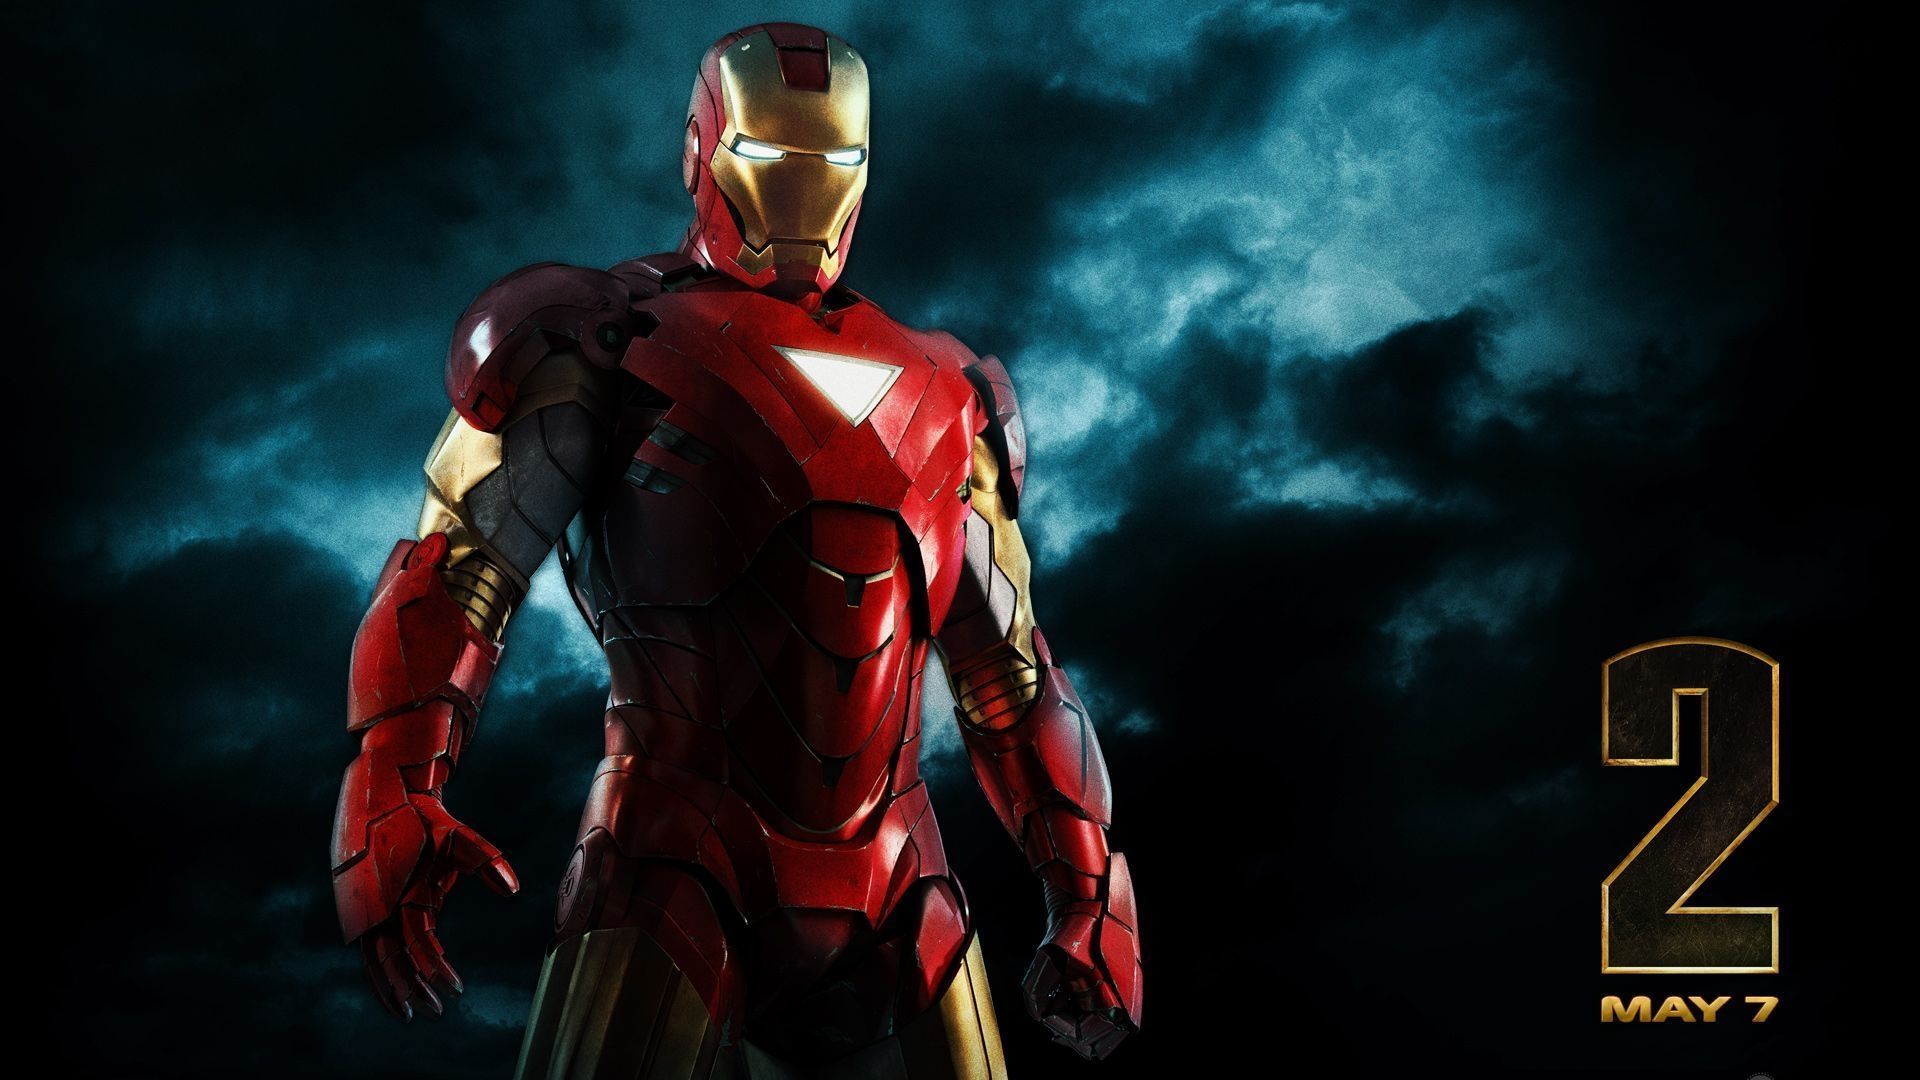 Robert Downey Jr In Iron Man HD Image Movies